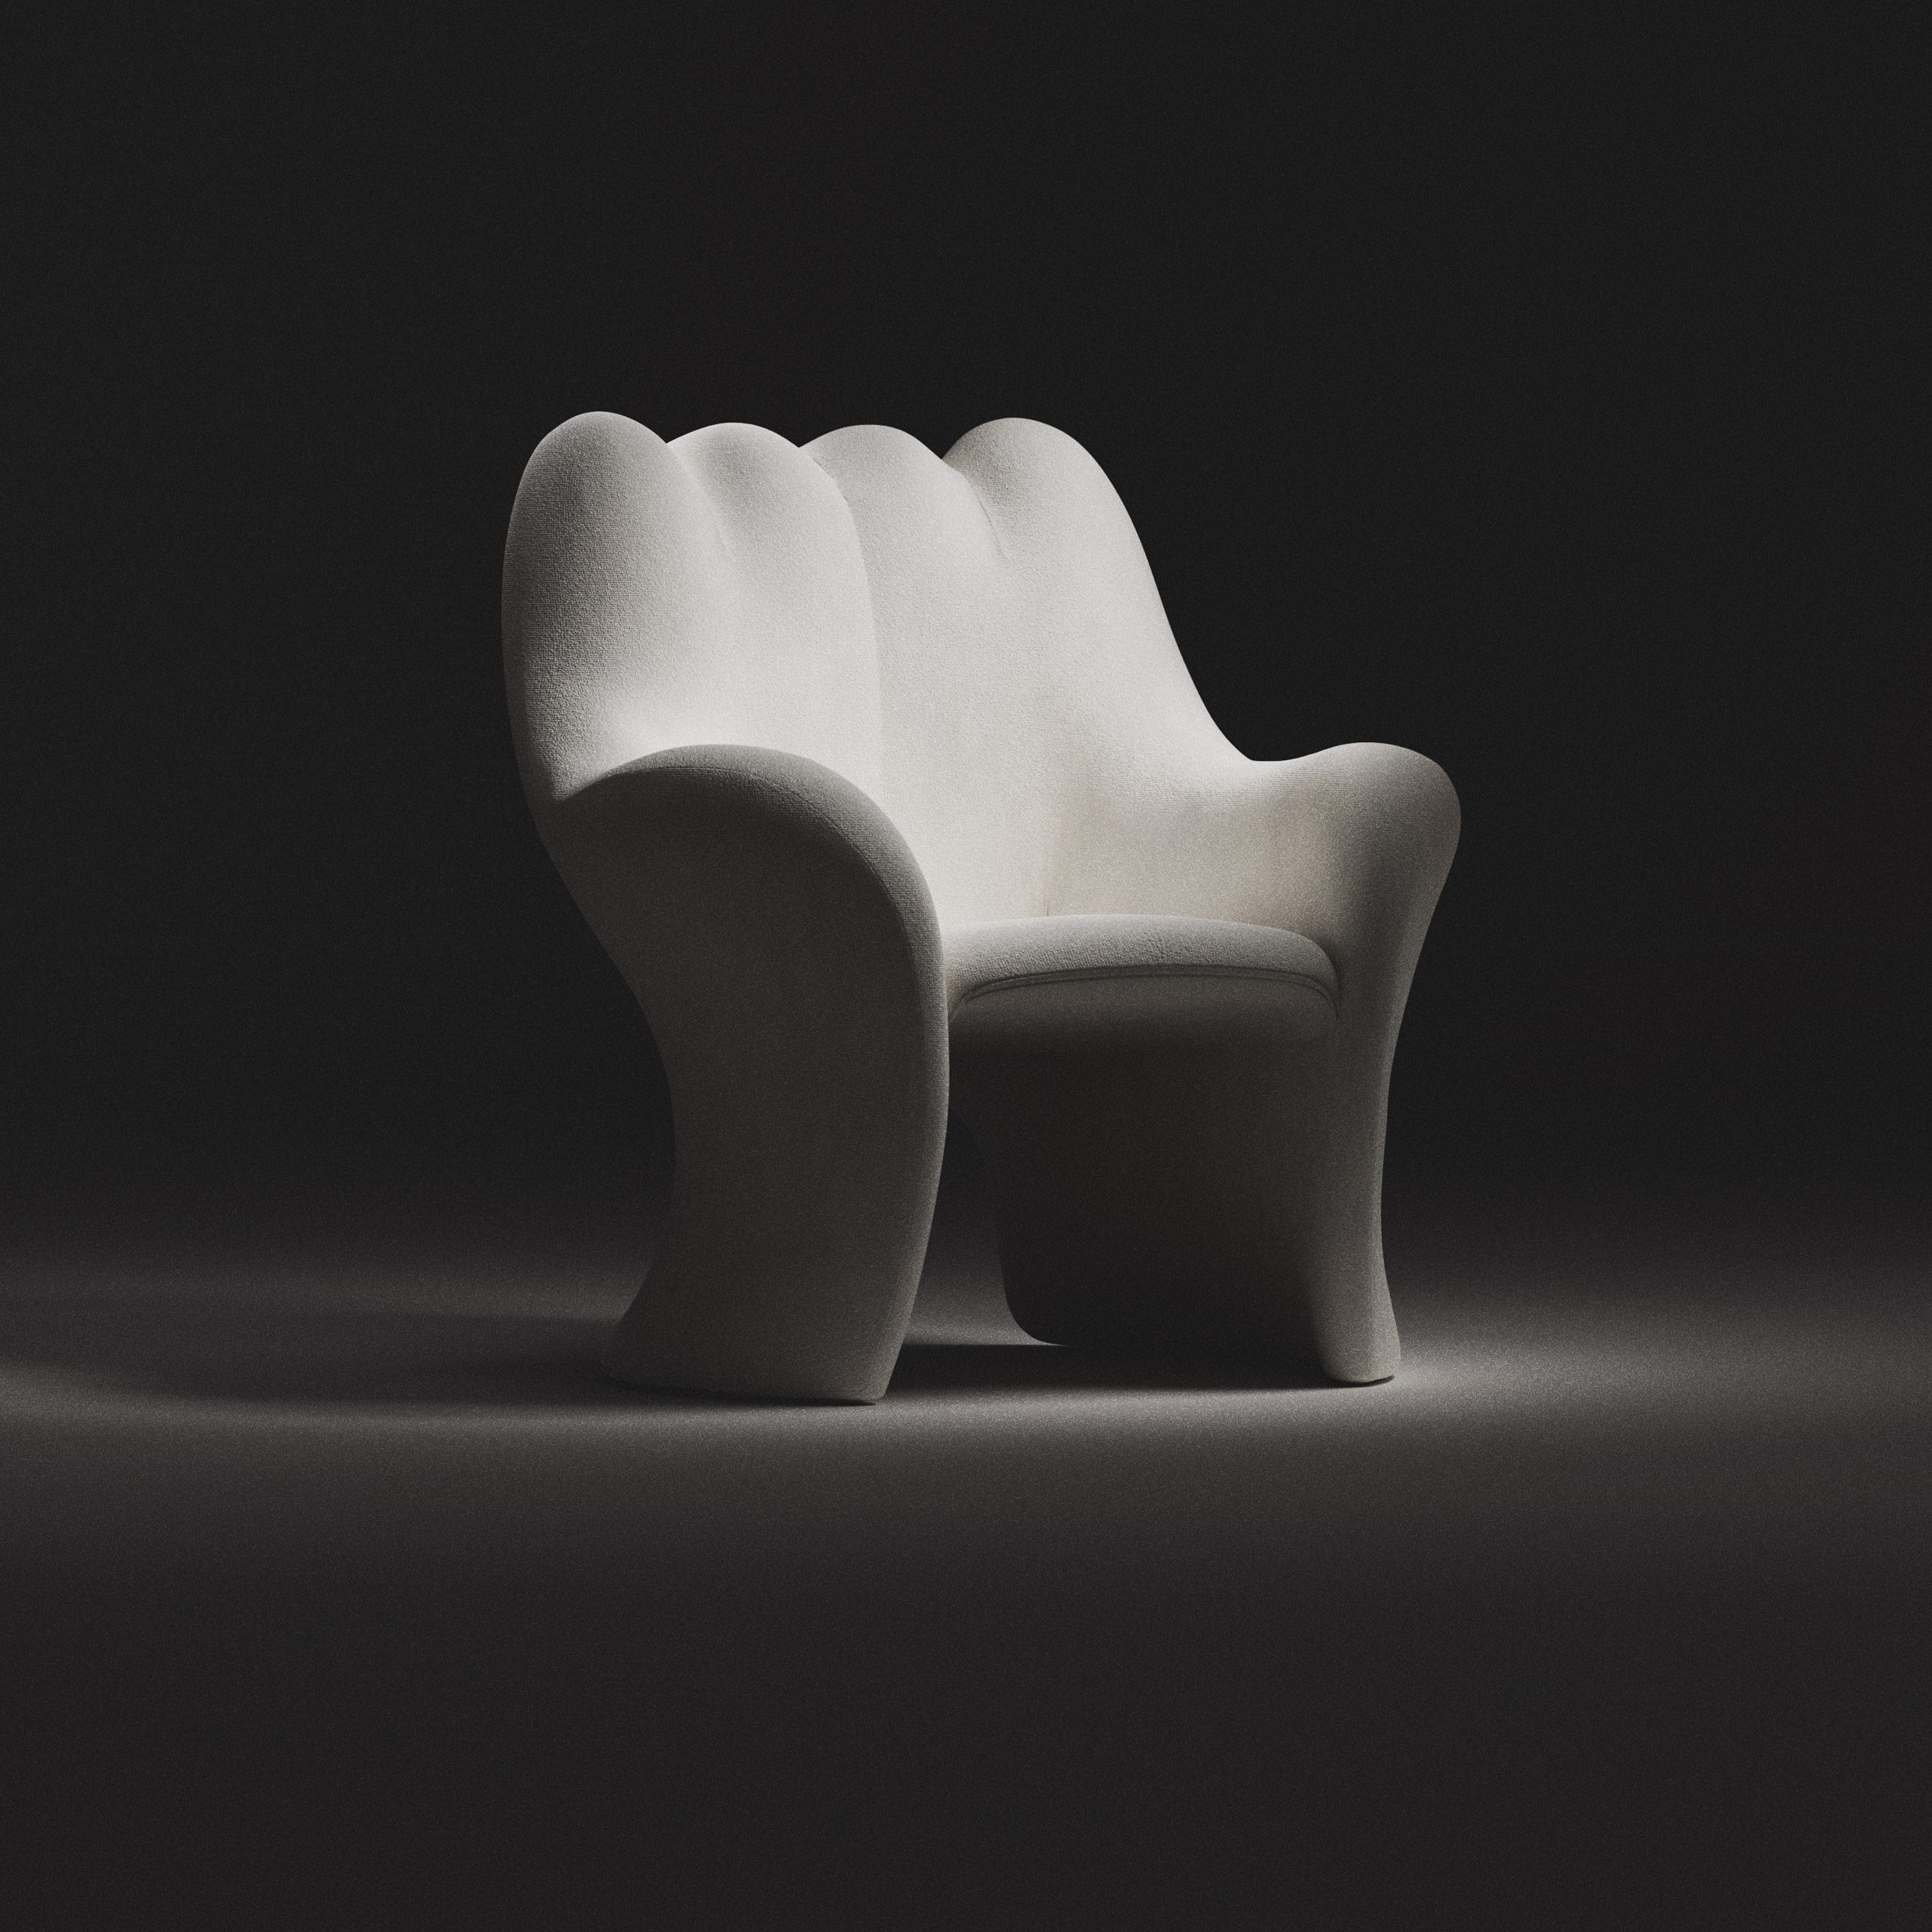 12 Chairs For Meditation by Andrés Reisinger for Nilufar